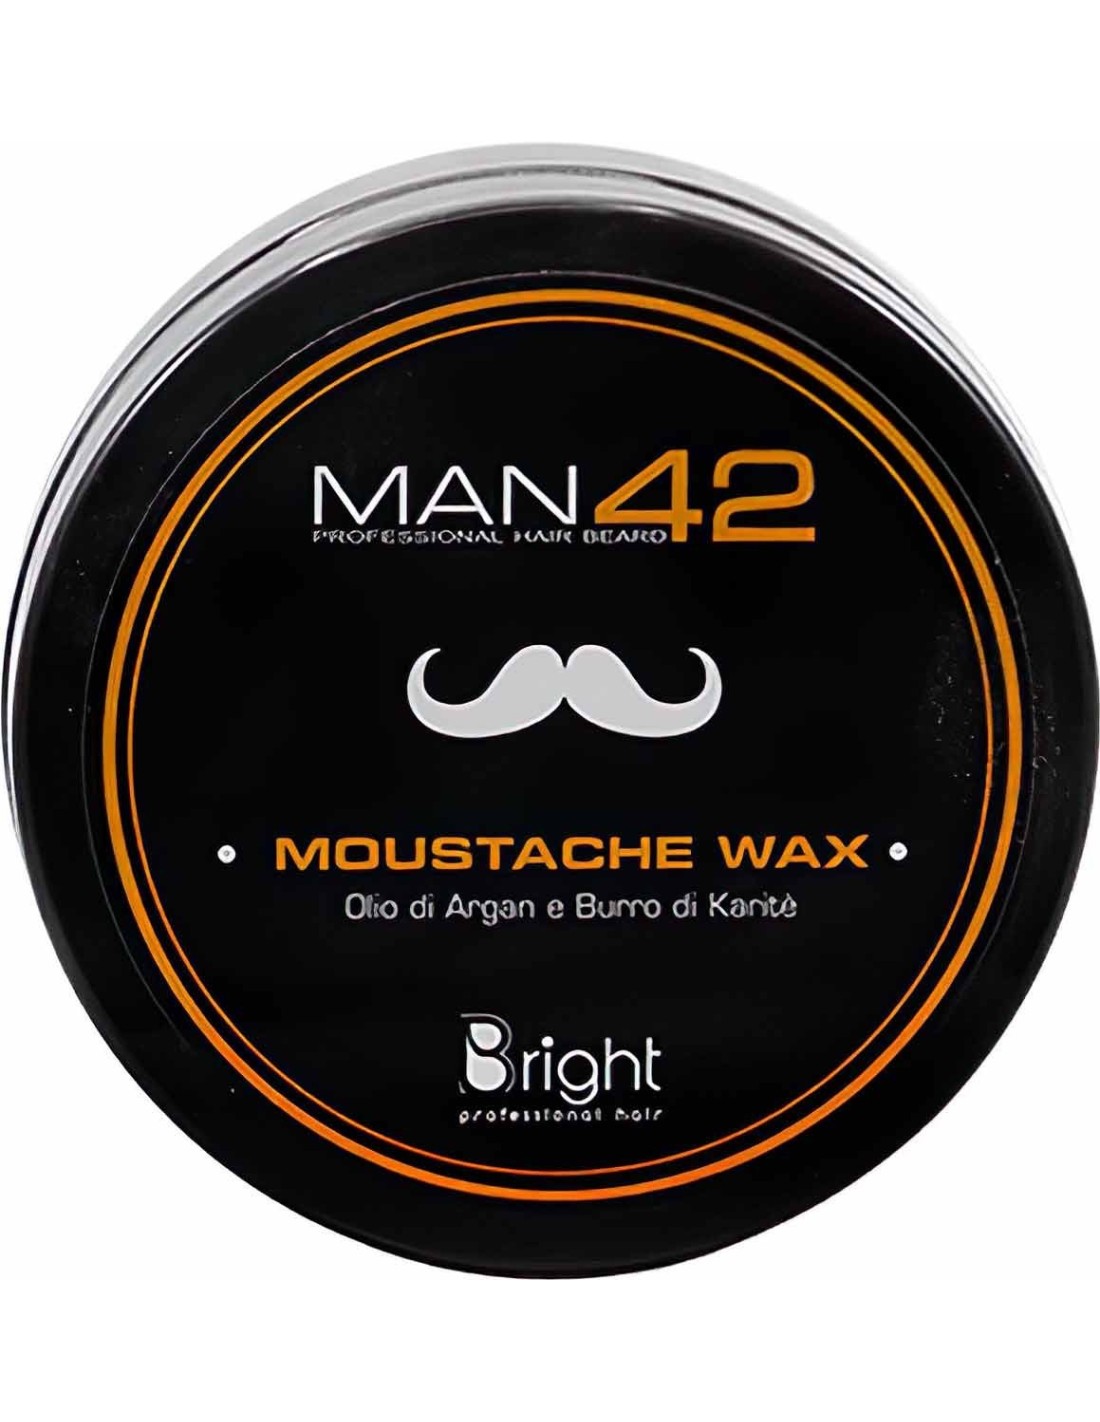 Man42 Moustache Wax 50ml 